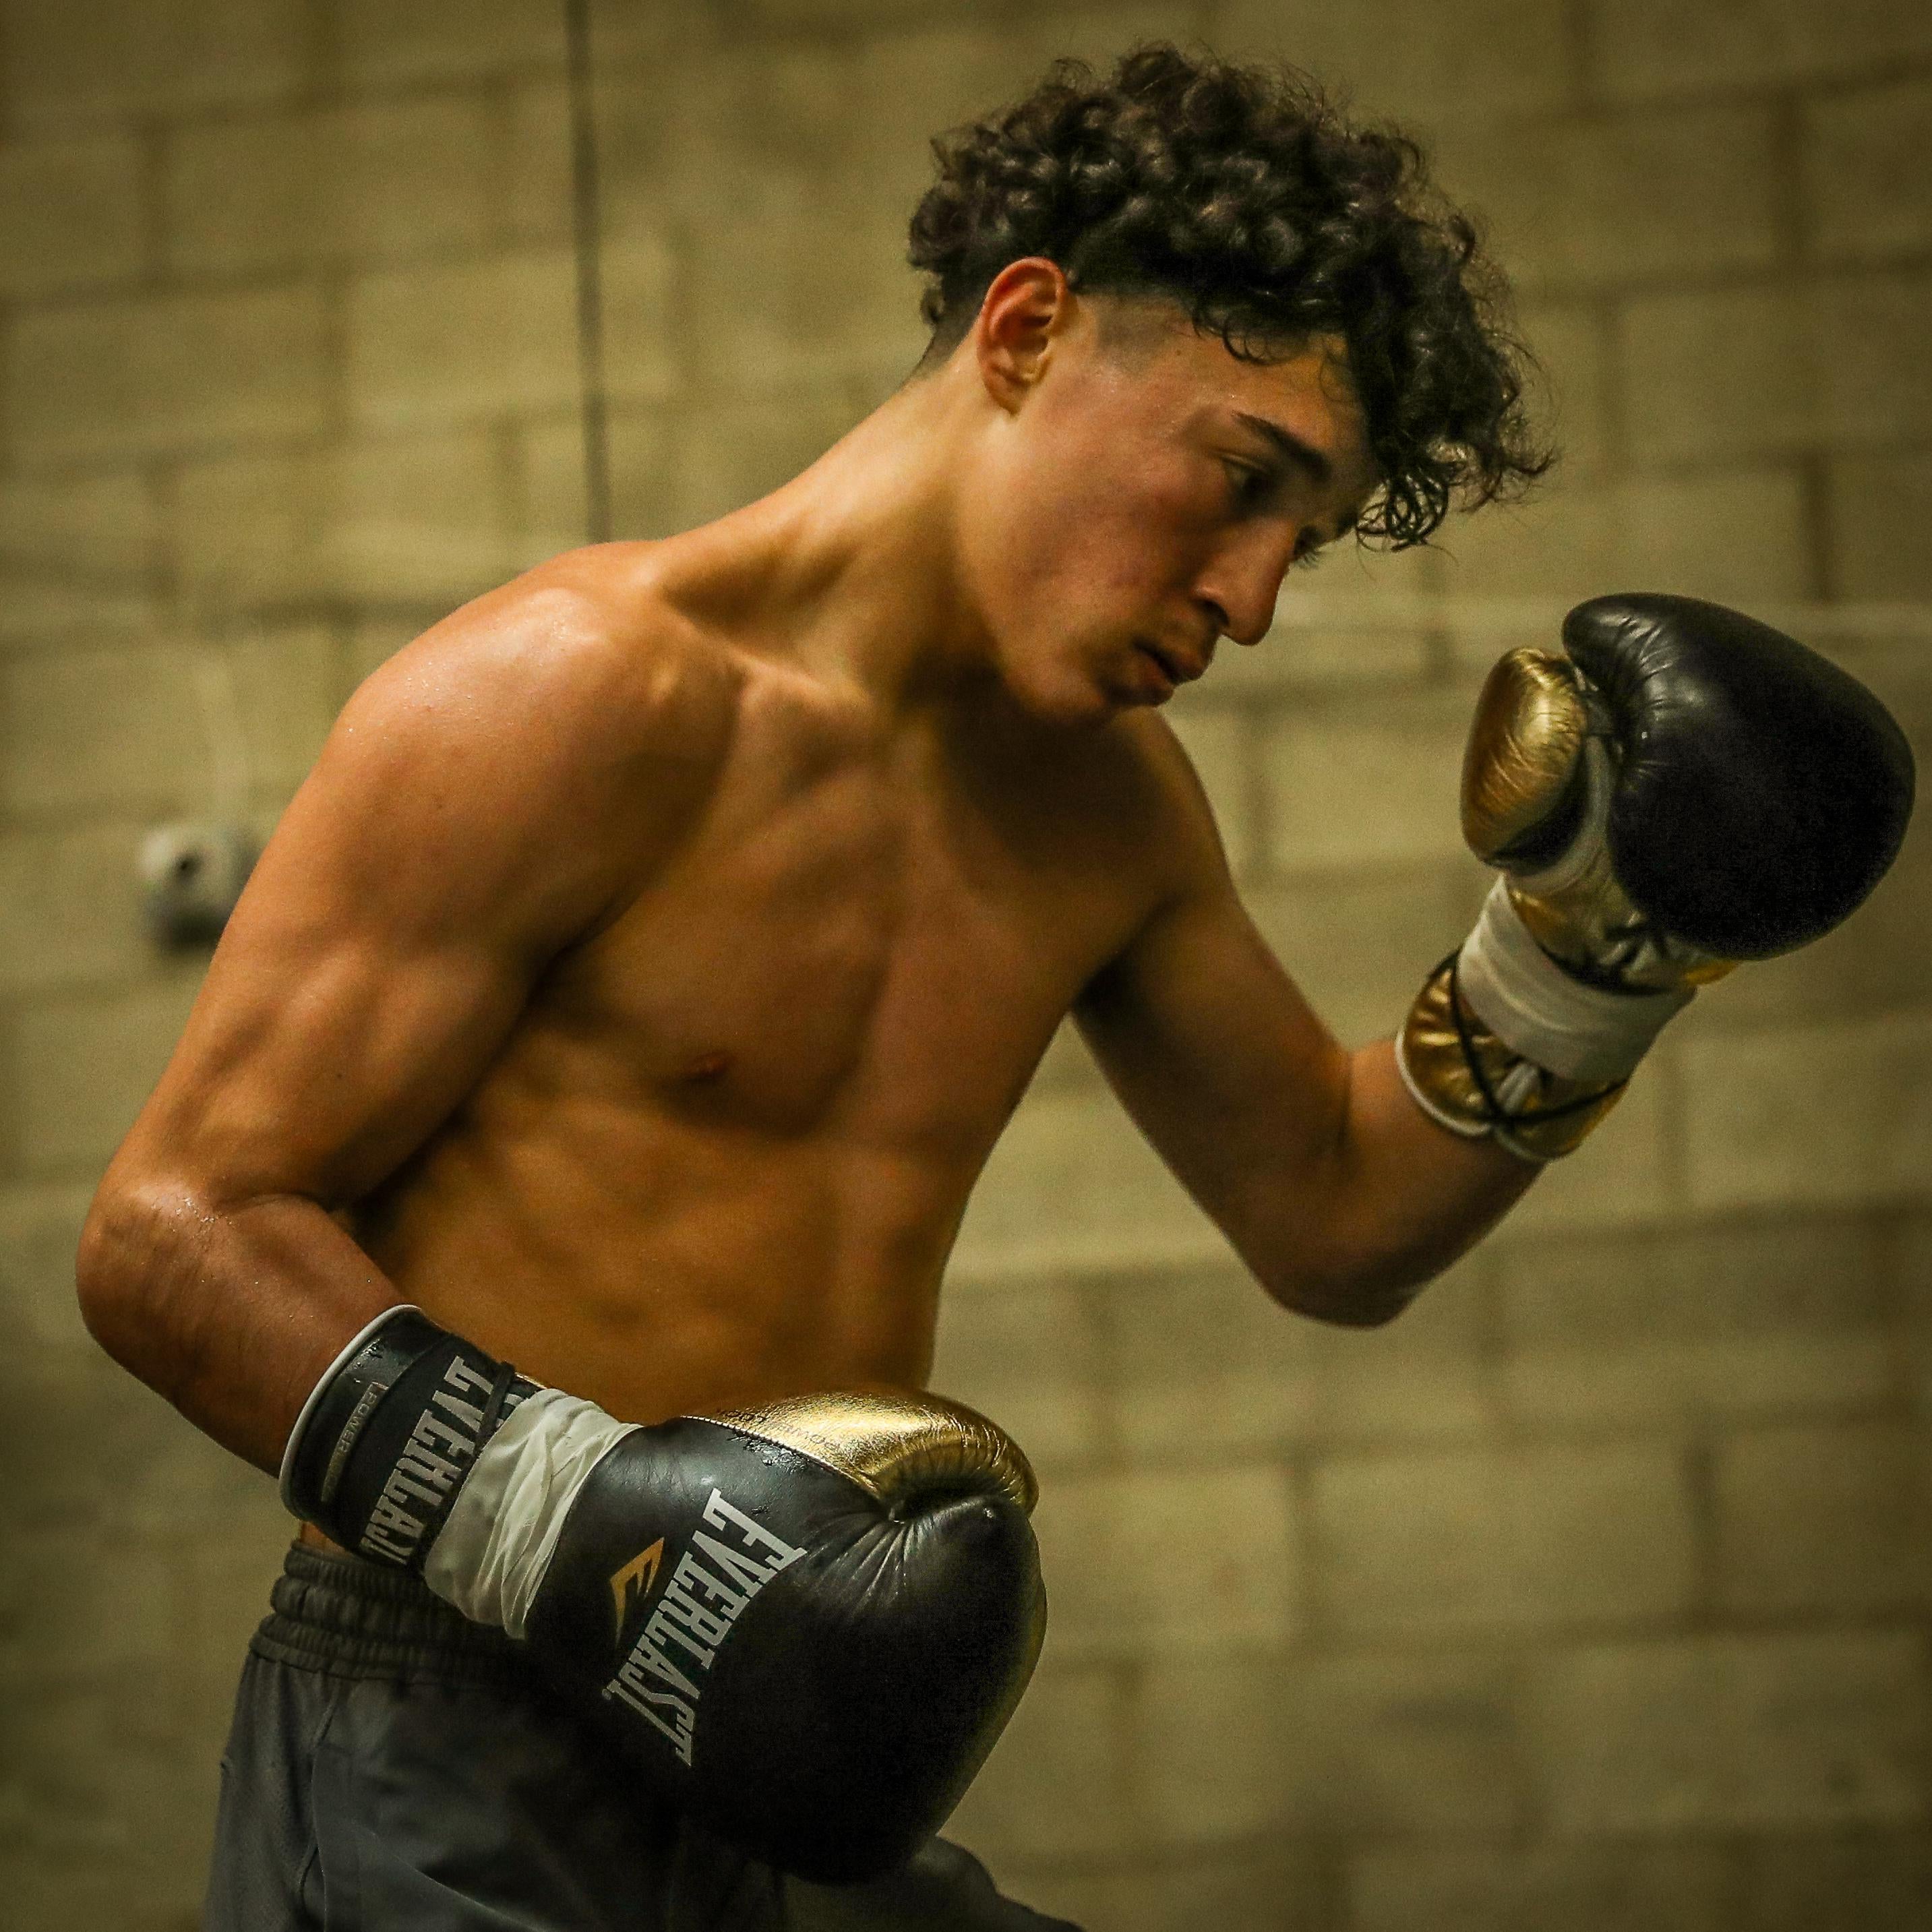 Mayumi Cabrera Figurative Photograph - USA Boxer Steve Navarro, color photography, Boxing, Team Steve Navarro